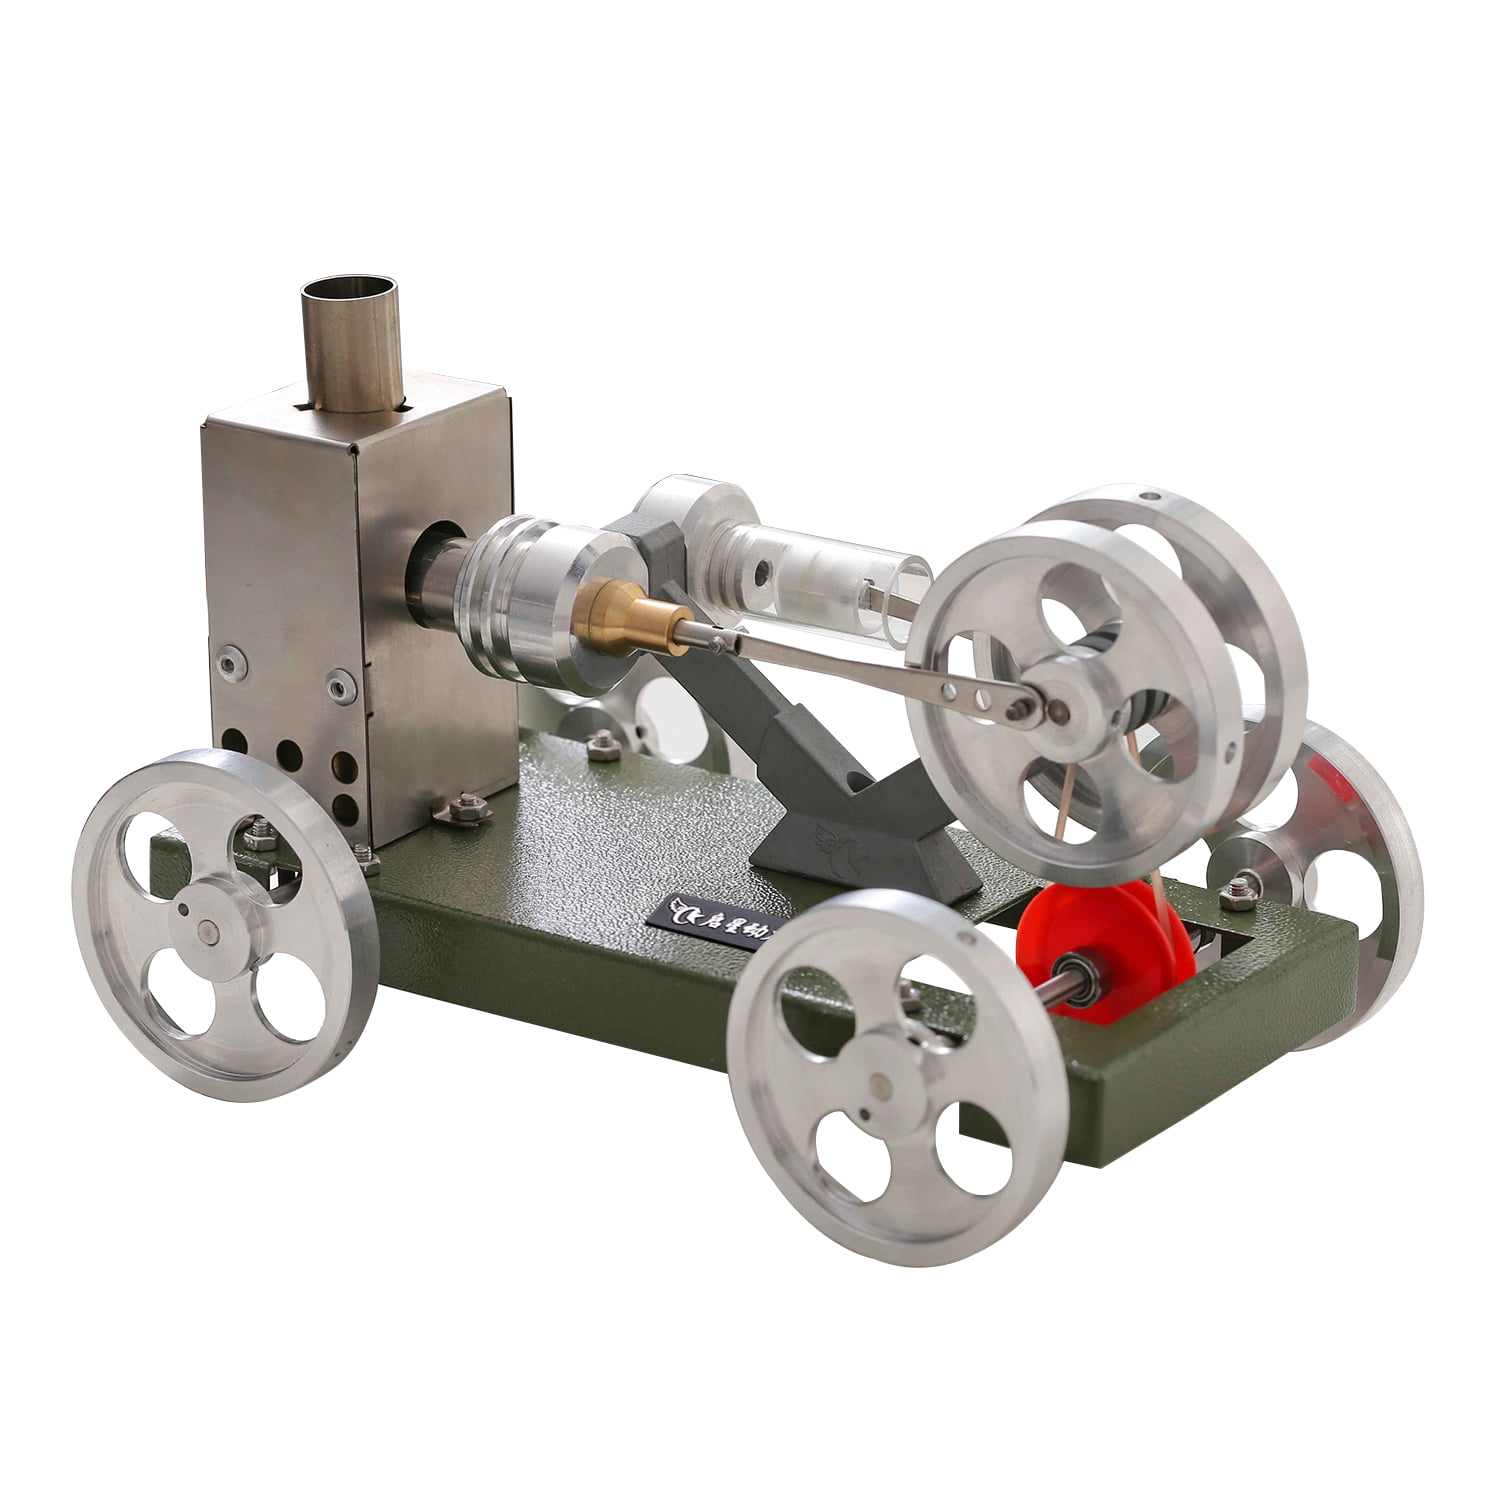 Mini Hot Air Stirling Engine Motor Model Educational Toy DIY Kit Gift For Kids 